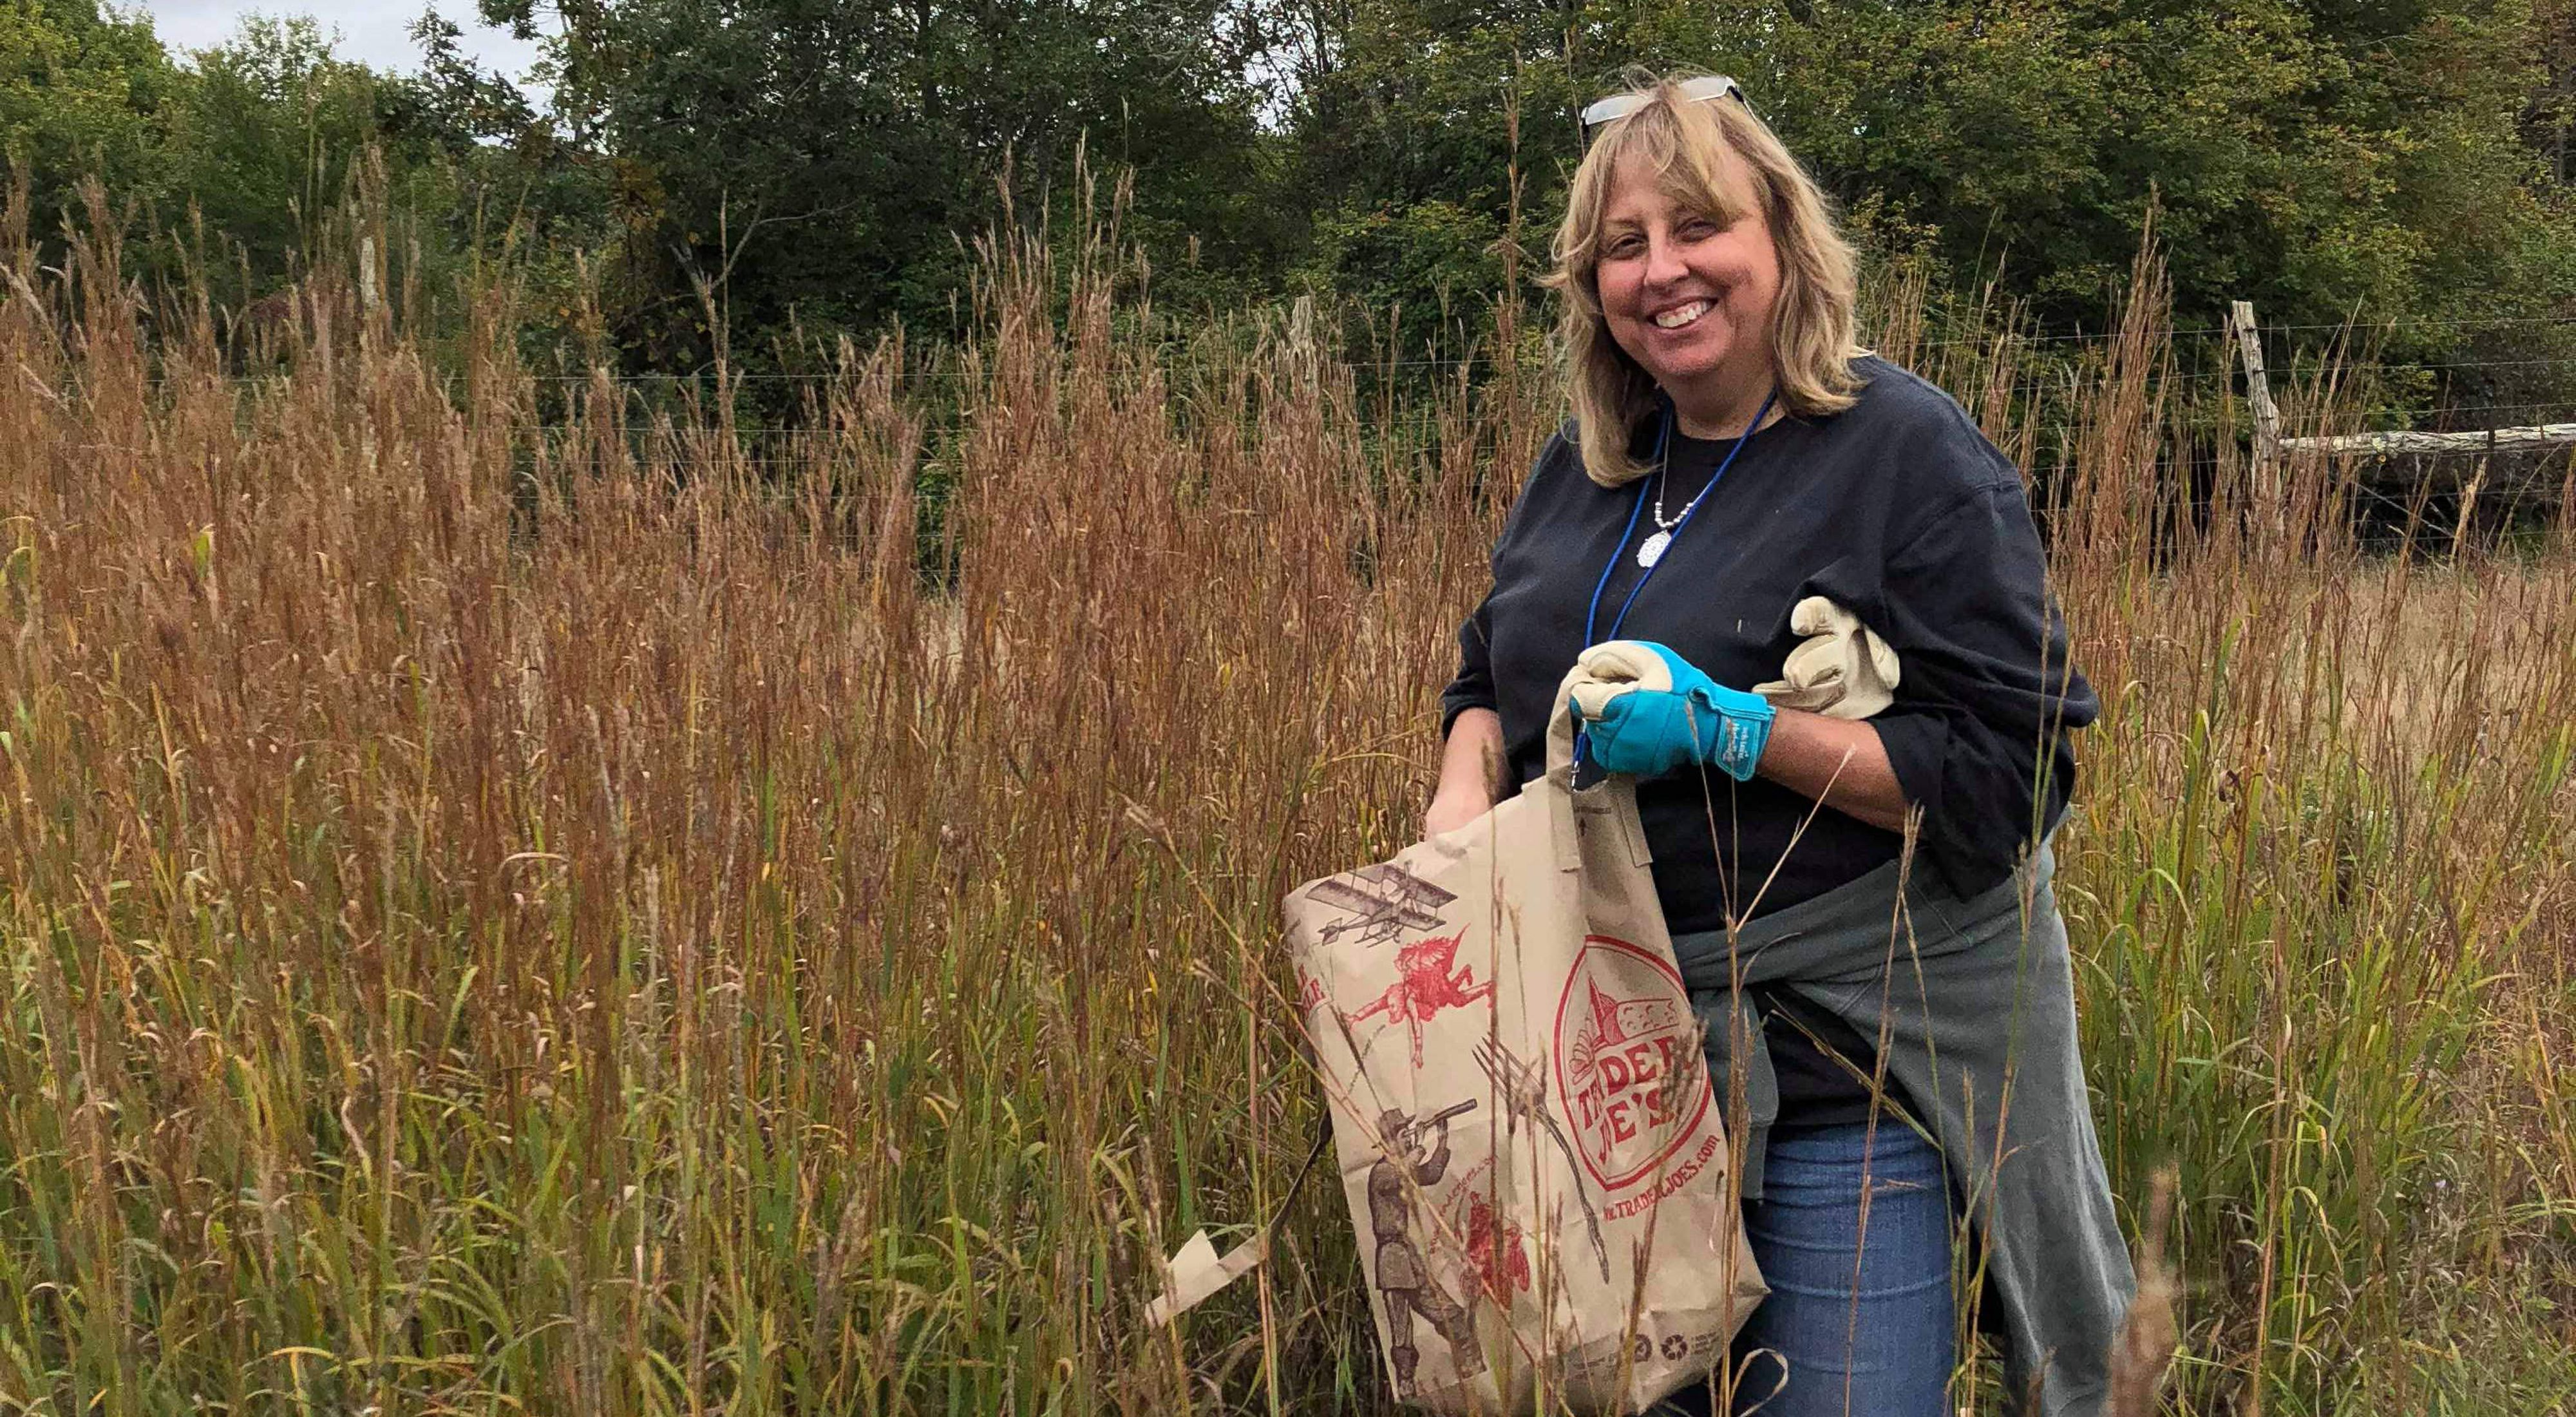 A smiling volunteer wearing gardening gloves puts trash in a paper bag.